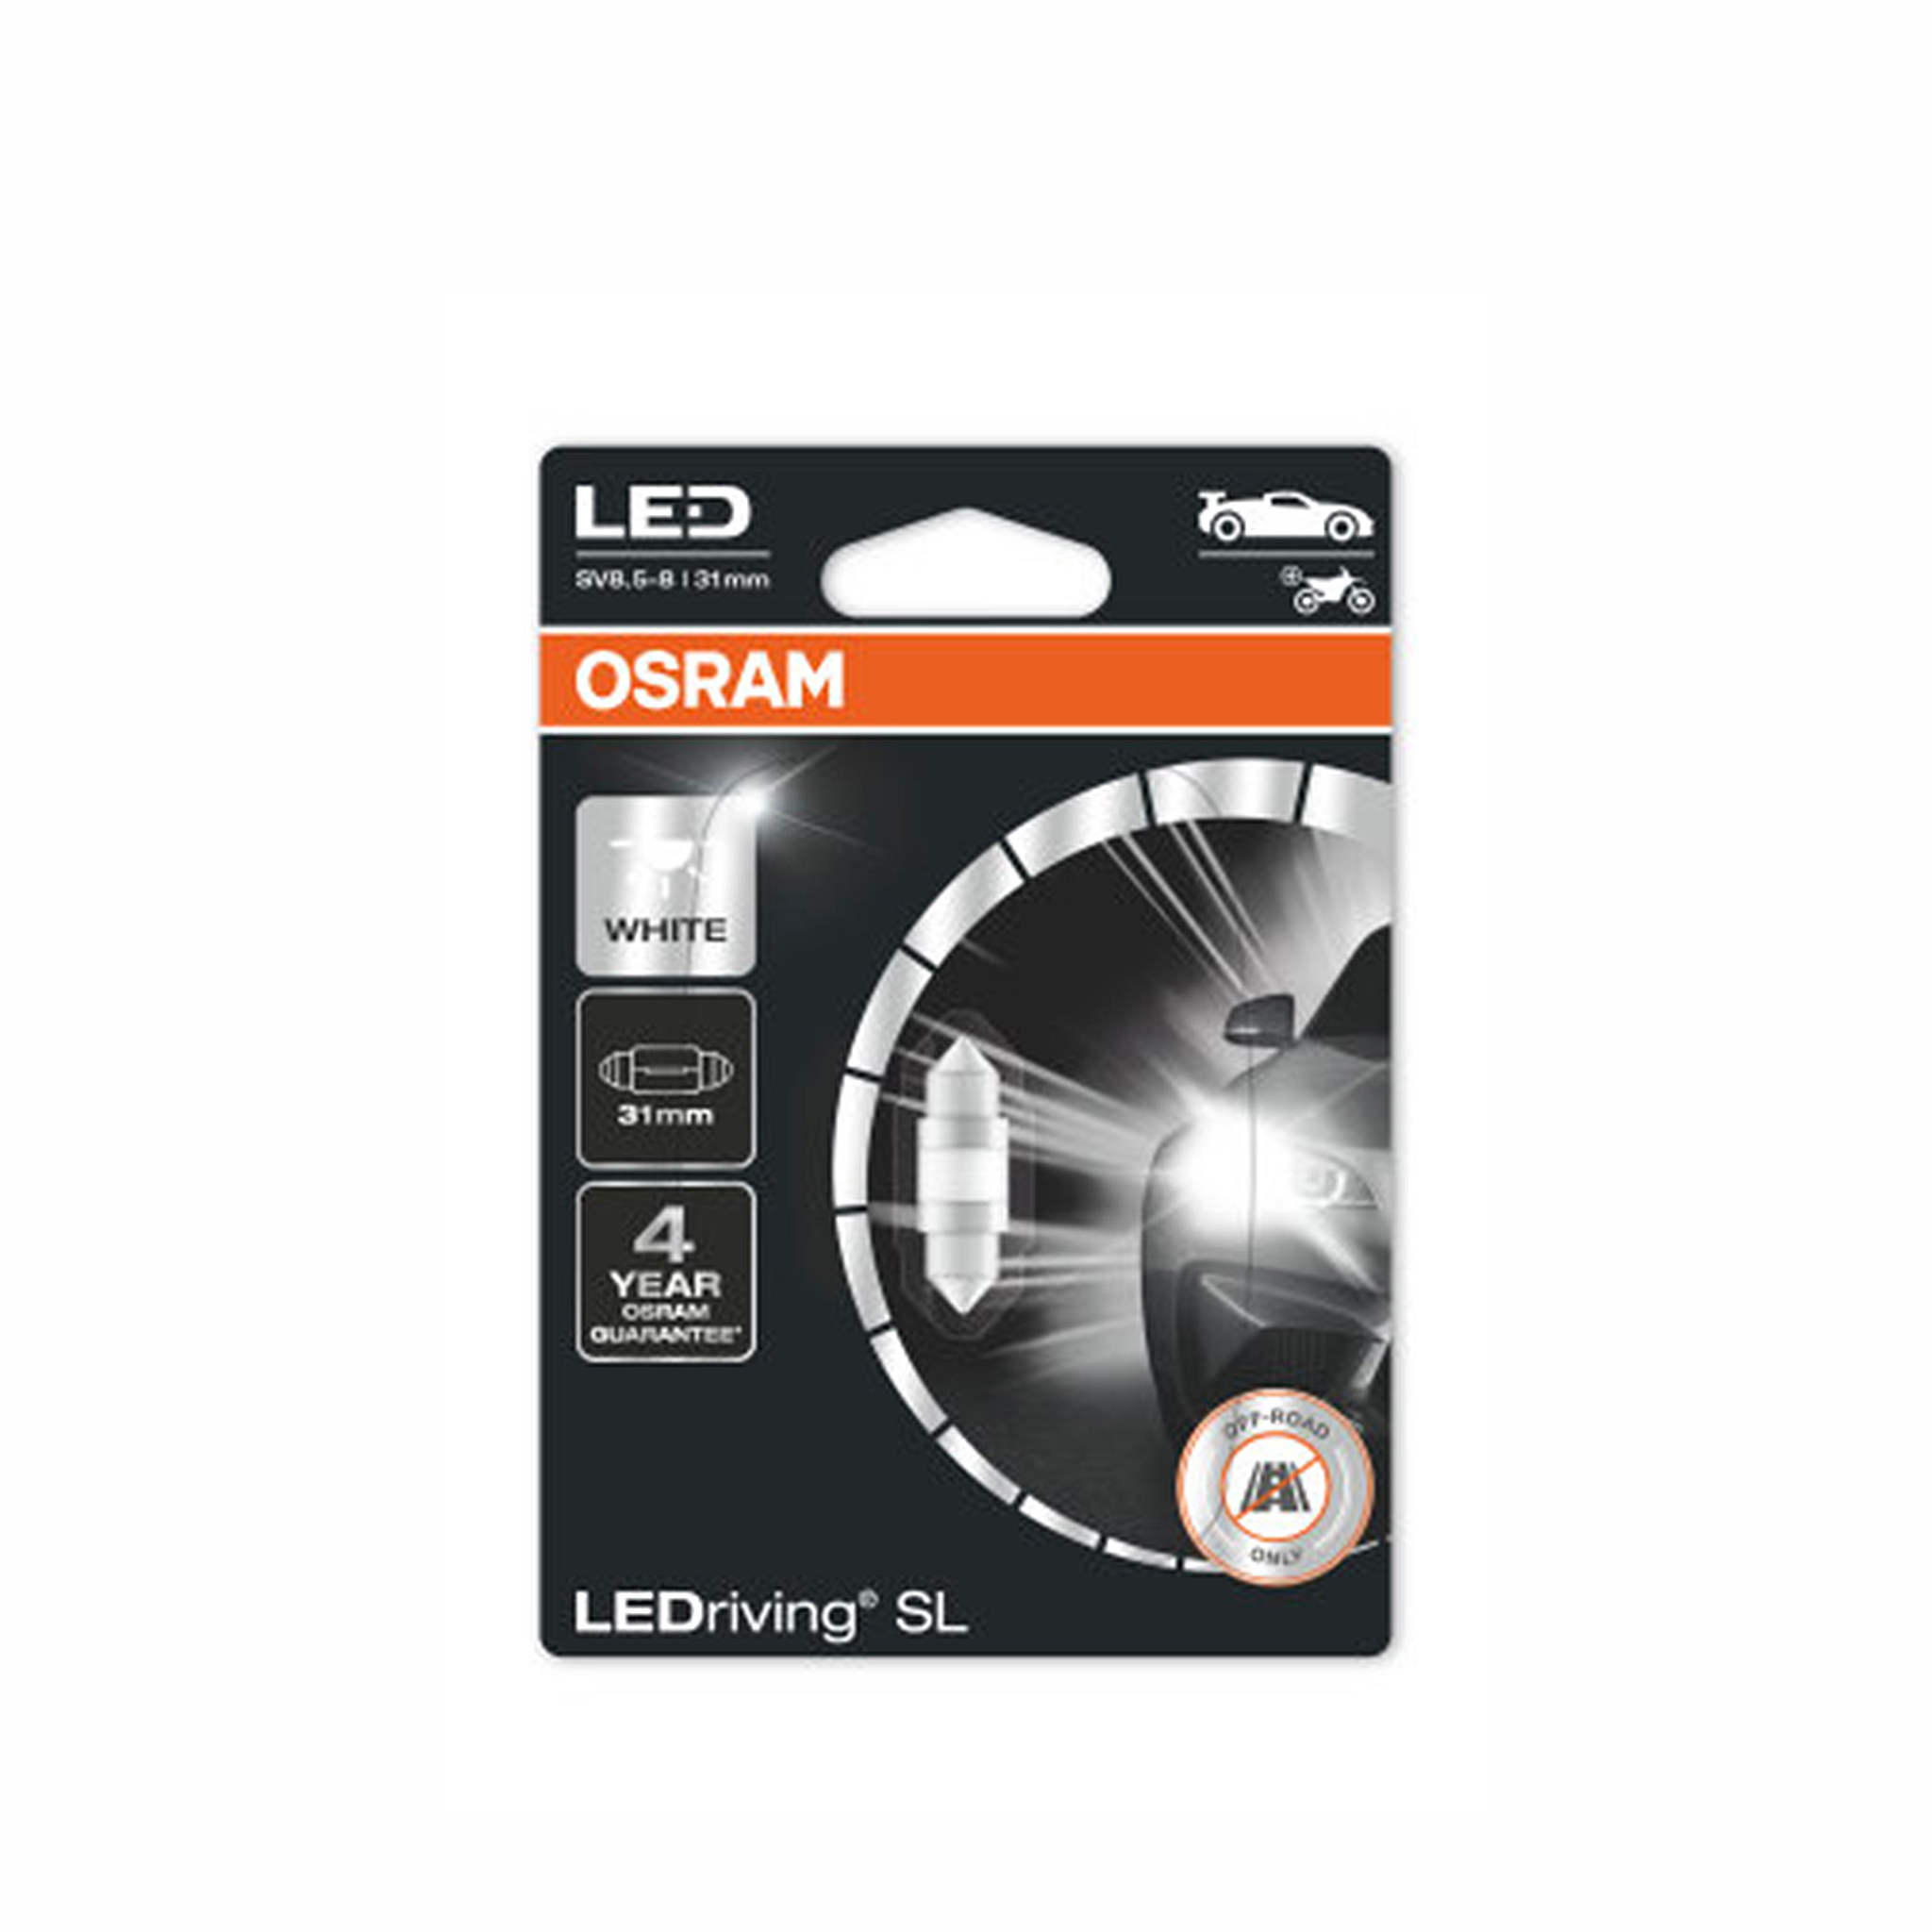 LED-spolepære Osram PREMIUM, 6000K, 31 mm